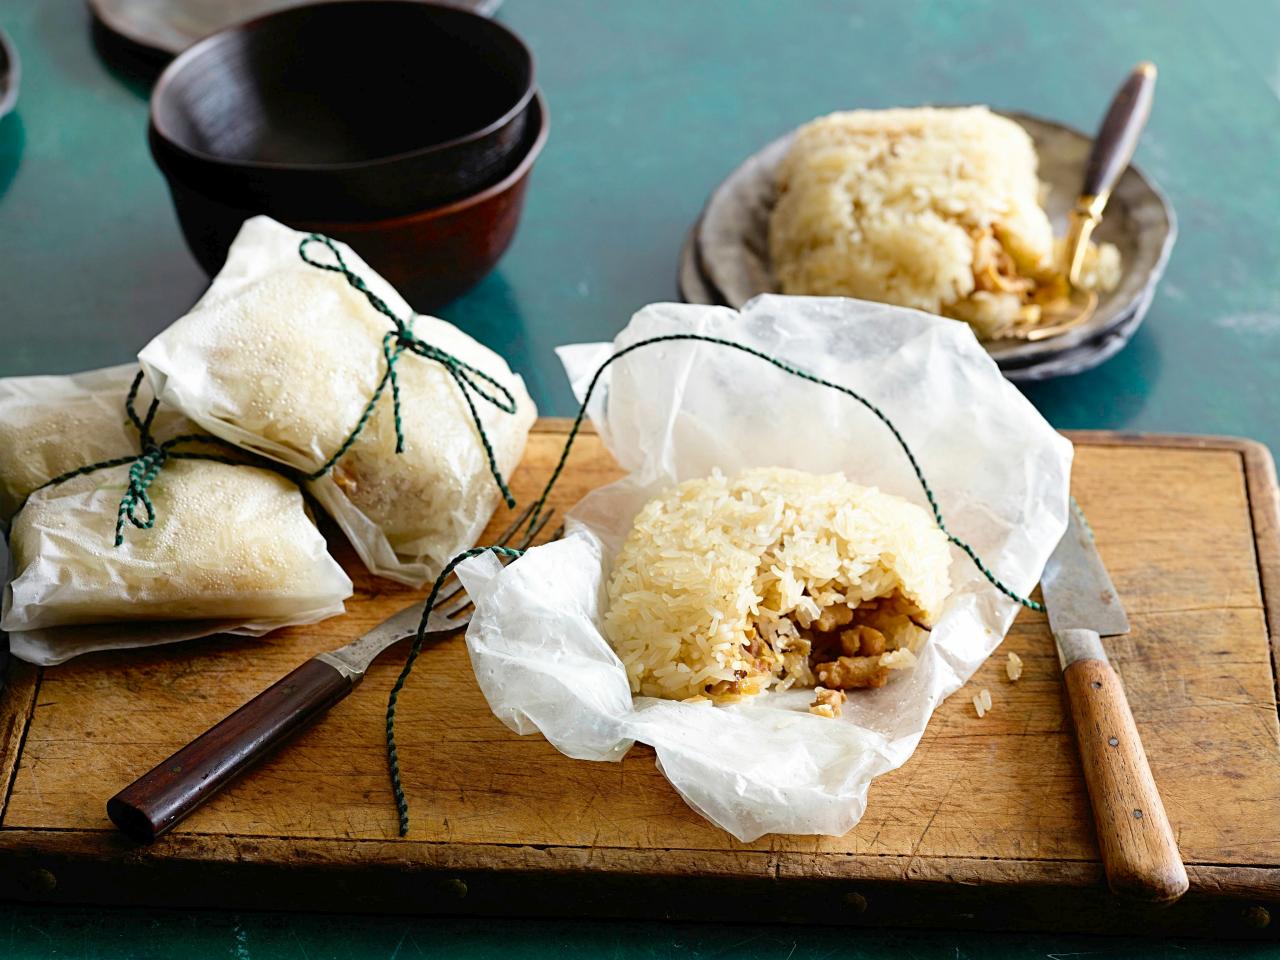 https://cook.fnr.sndimg.com/content/dam/images/cook/fullset/2014/3/14/0/CC_dumplings-thai-sticky-rice-dumplings-with-chicken-recipe_s4x3.jpg.rend.hgtvcom.1280.960.suffix/1394813228050.jpeg